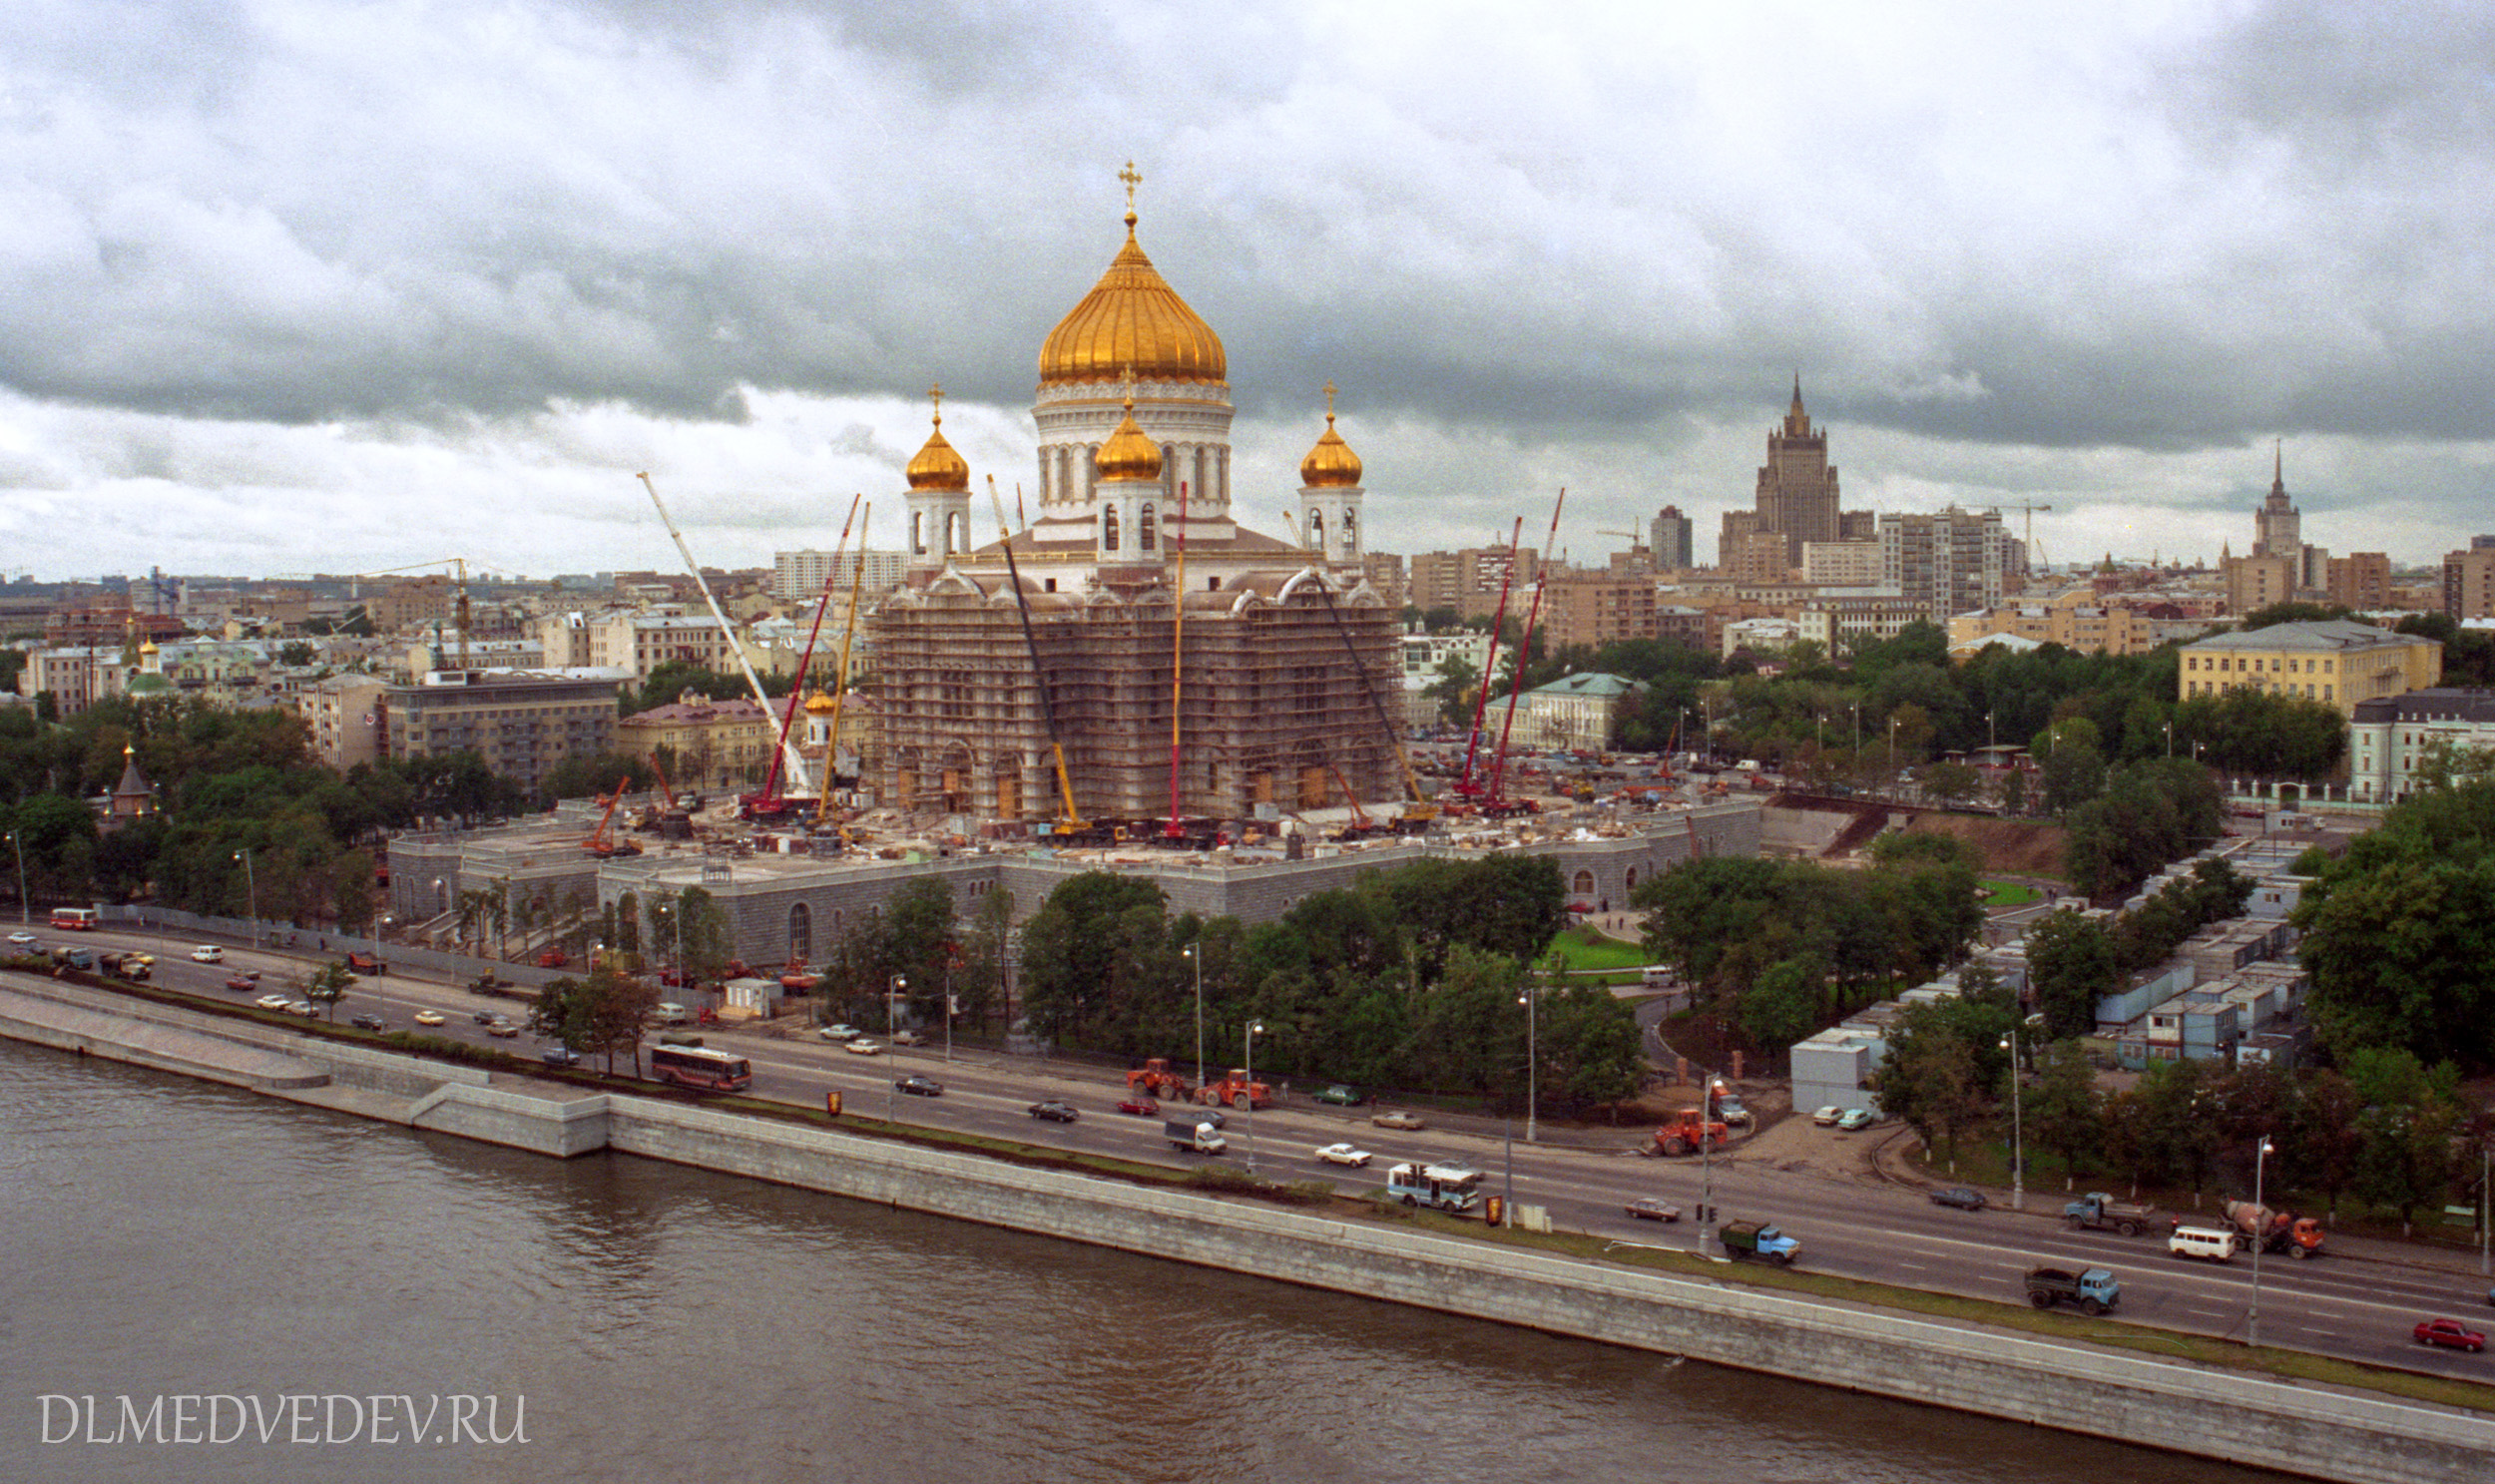 История Москвы, строительство Храма Христа Спасителя, фото Льва Медведева